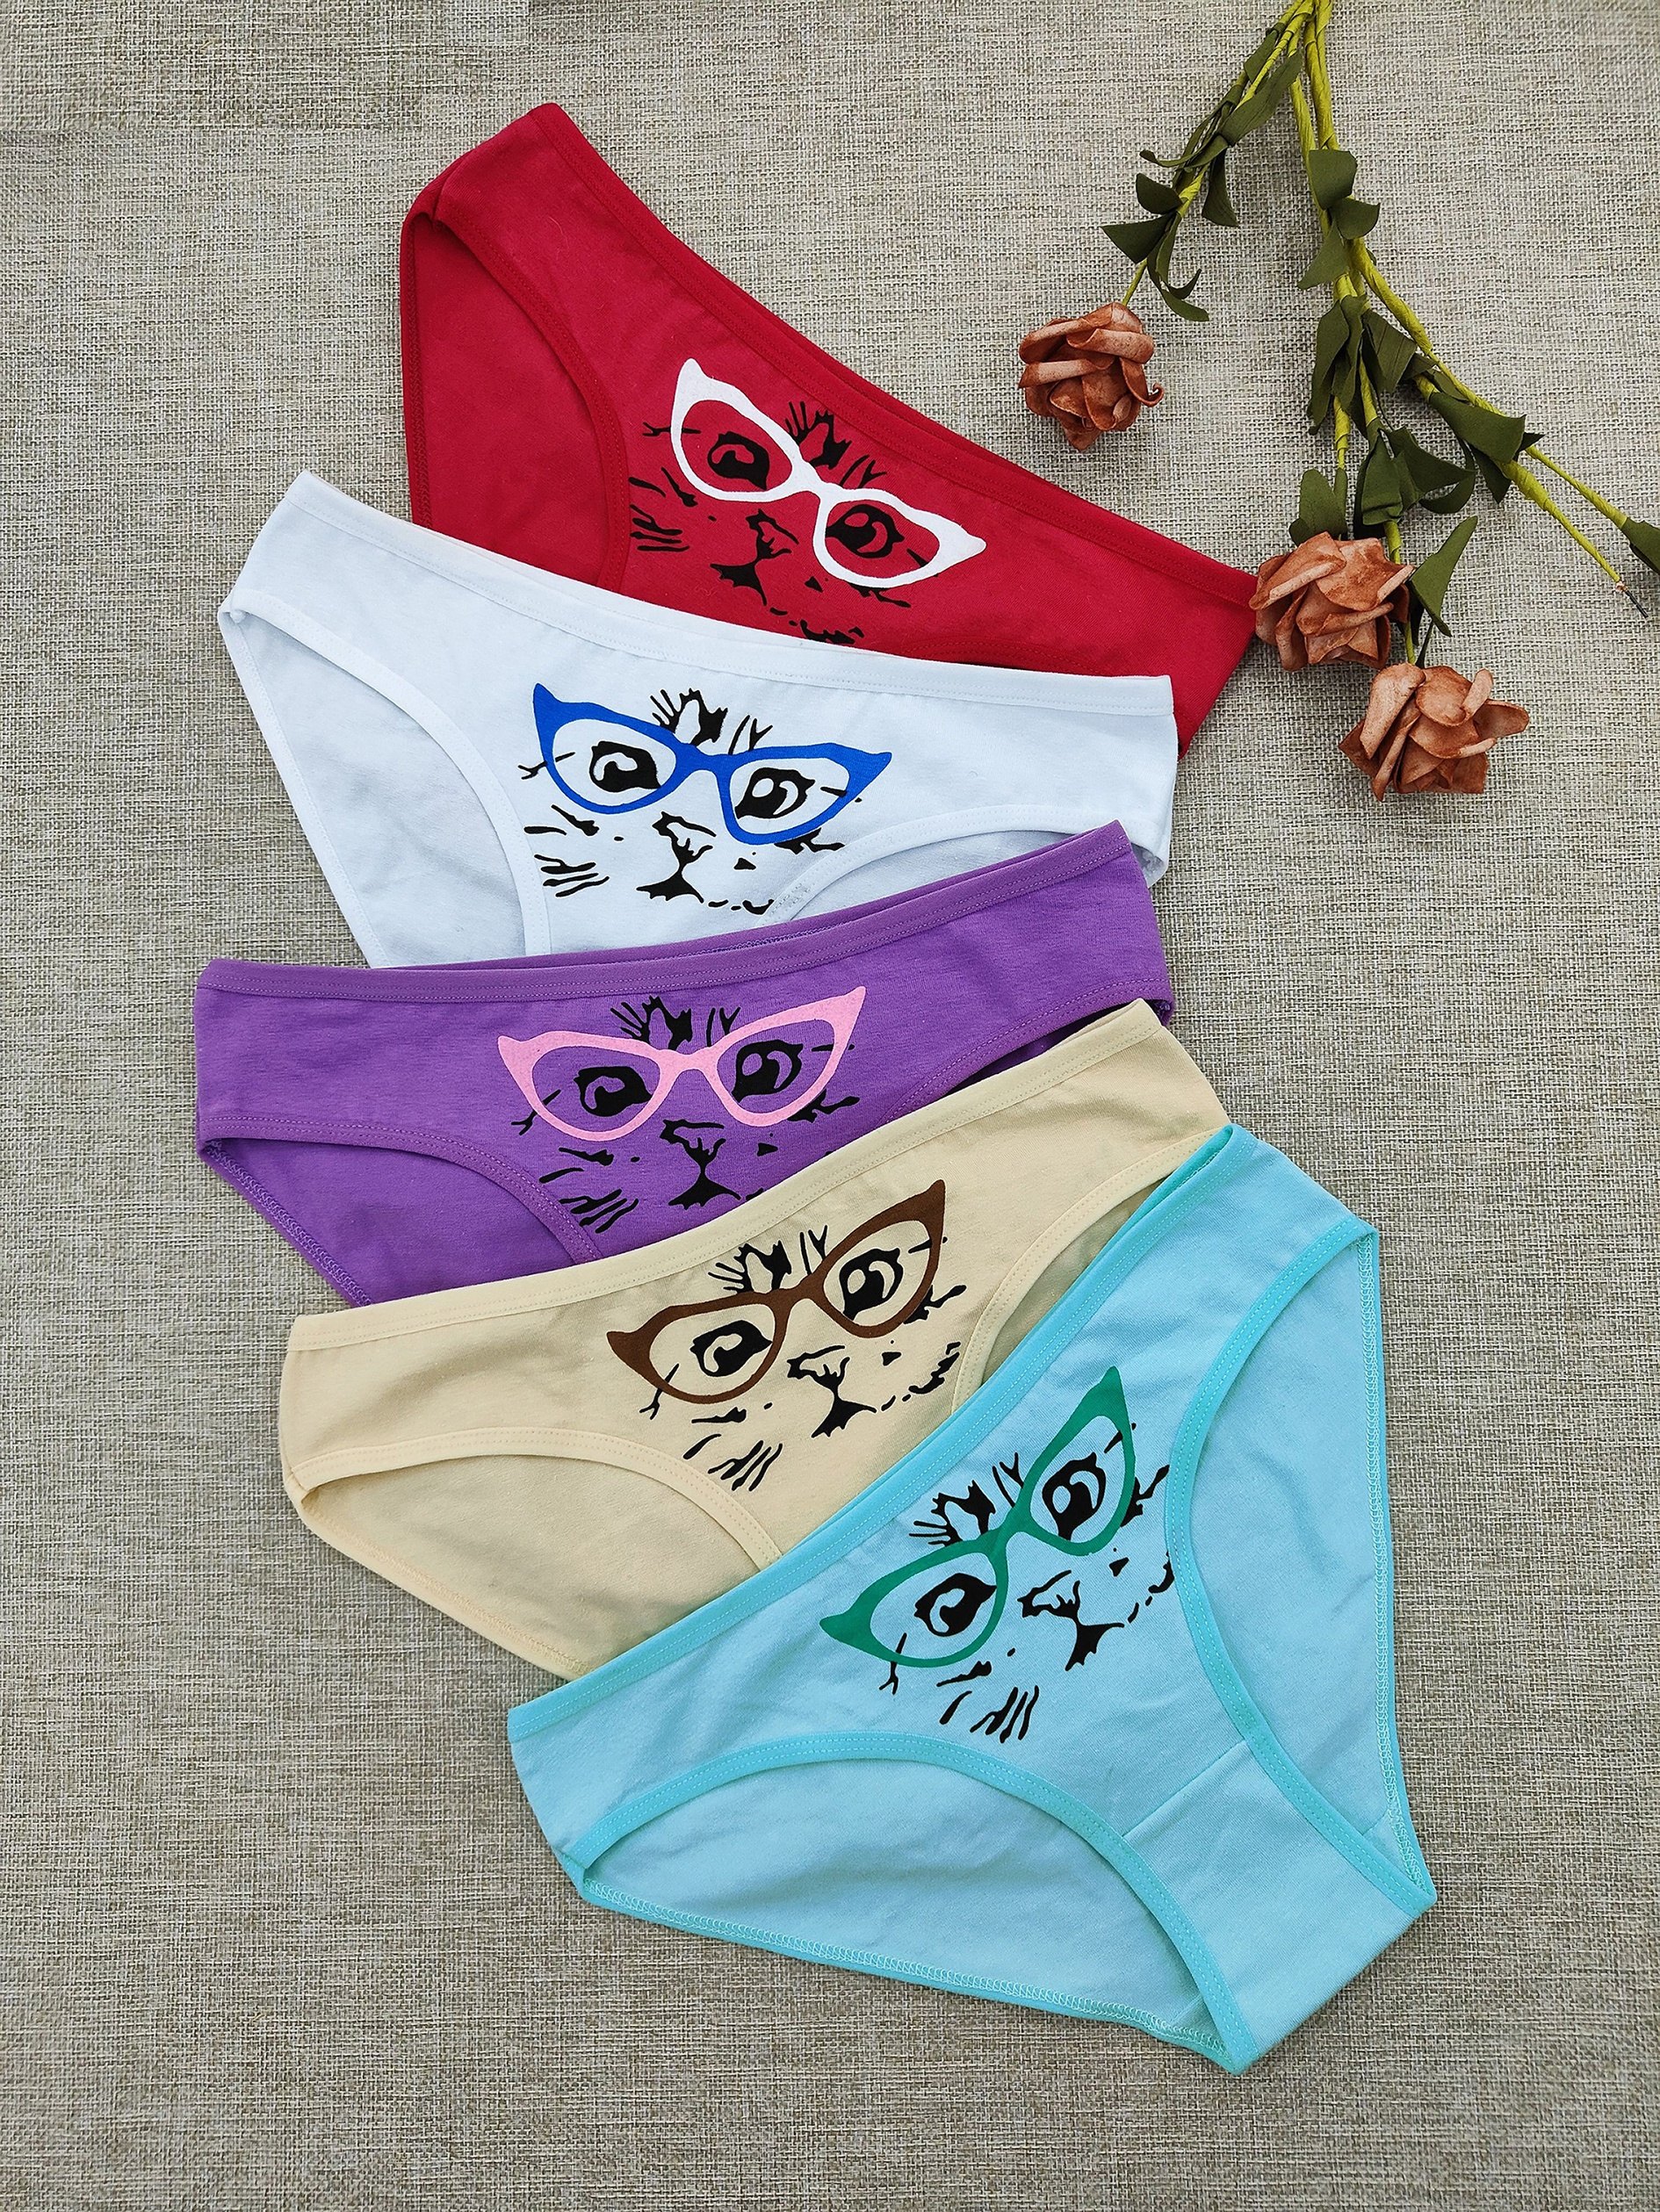 6pcs Cat Pattern Hispter Panties, Comfy Letter Tape Intimates Panties,  Women'a Lingerie & Underwear